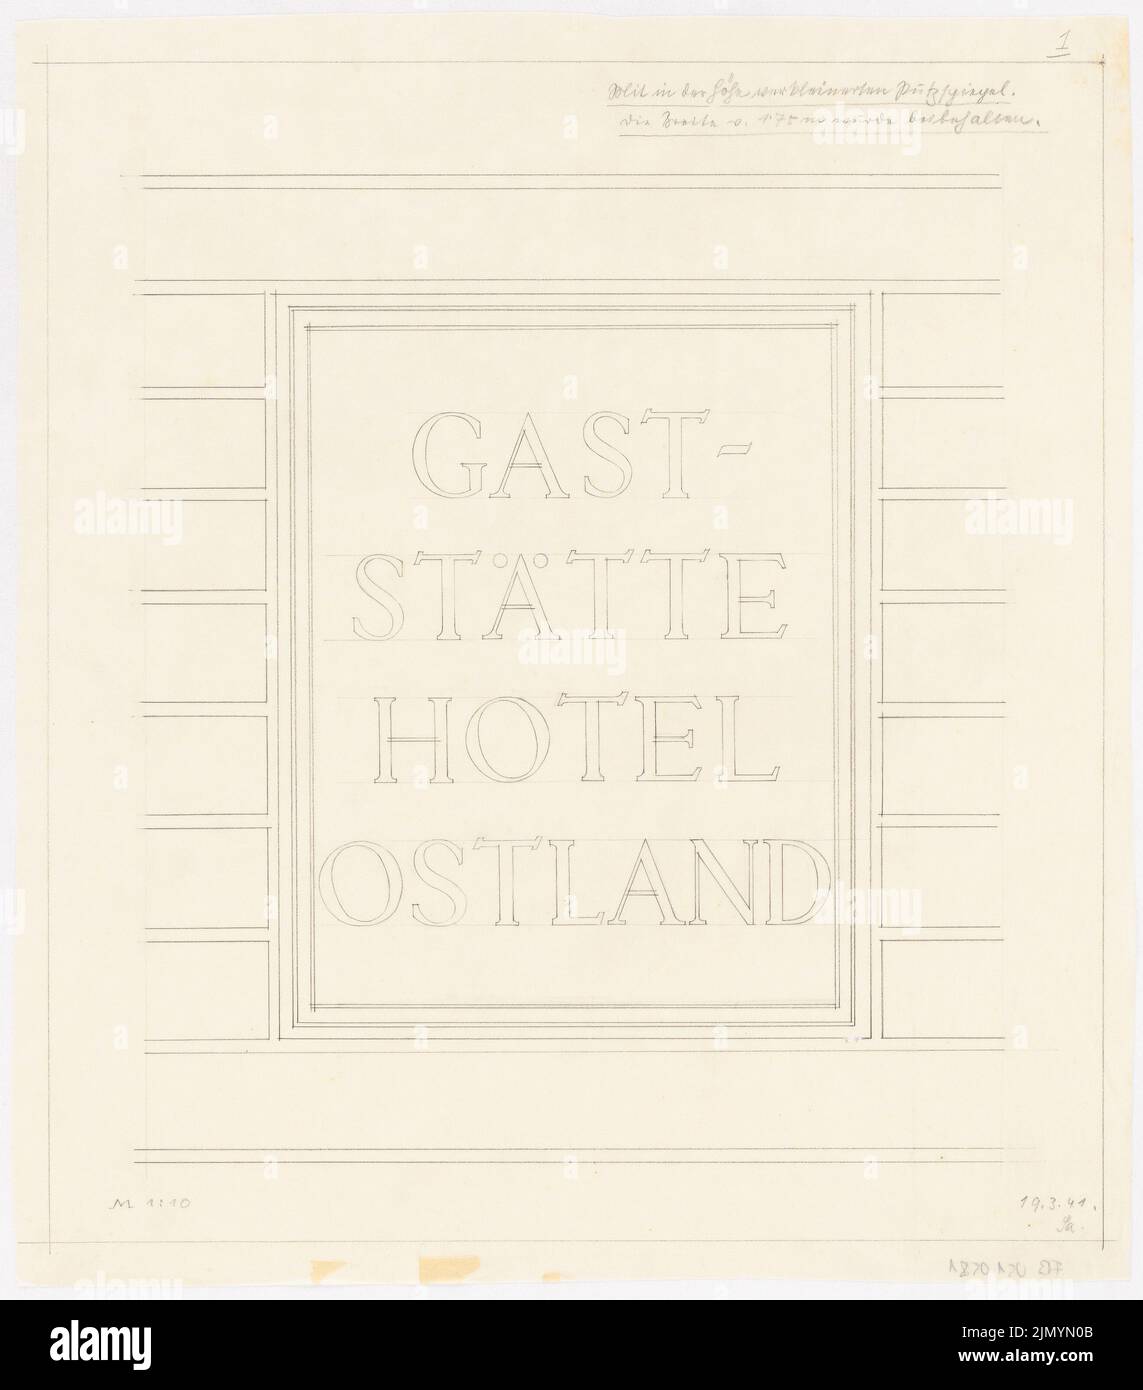 Böhmer Franz (1907-1943), Park Hotel in Posen (March 19, 1941): Restaurant sign 1:10. Pencil on transparent, 45.8 x 40.3 cm (including scan edges) Stock Photo